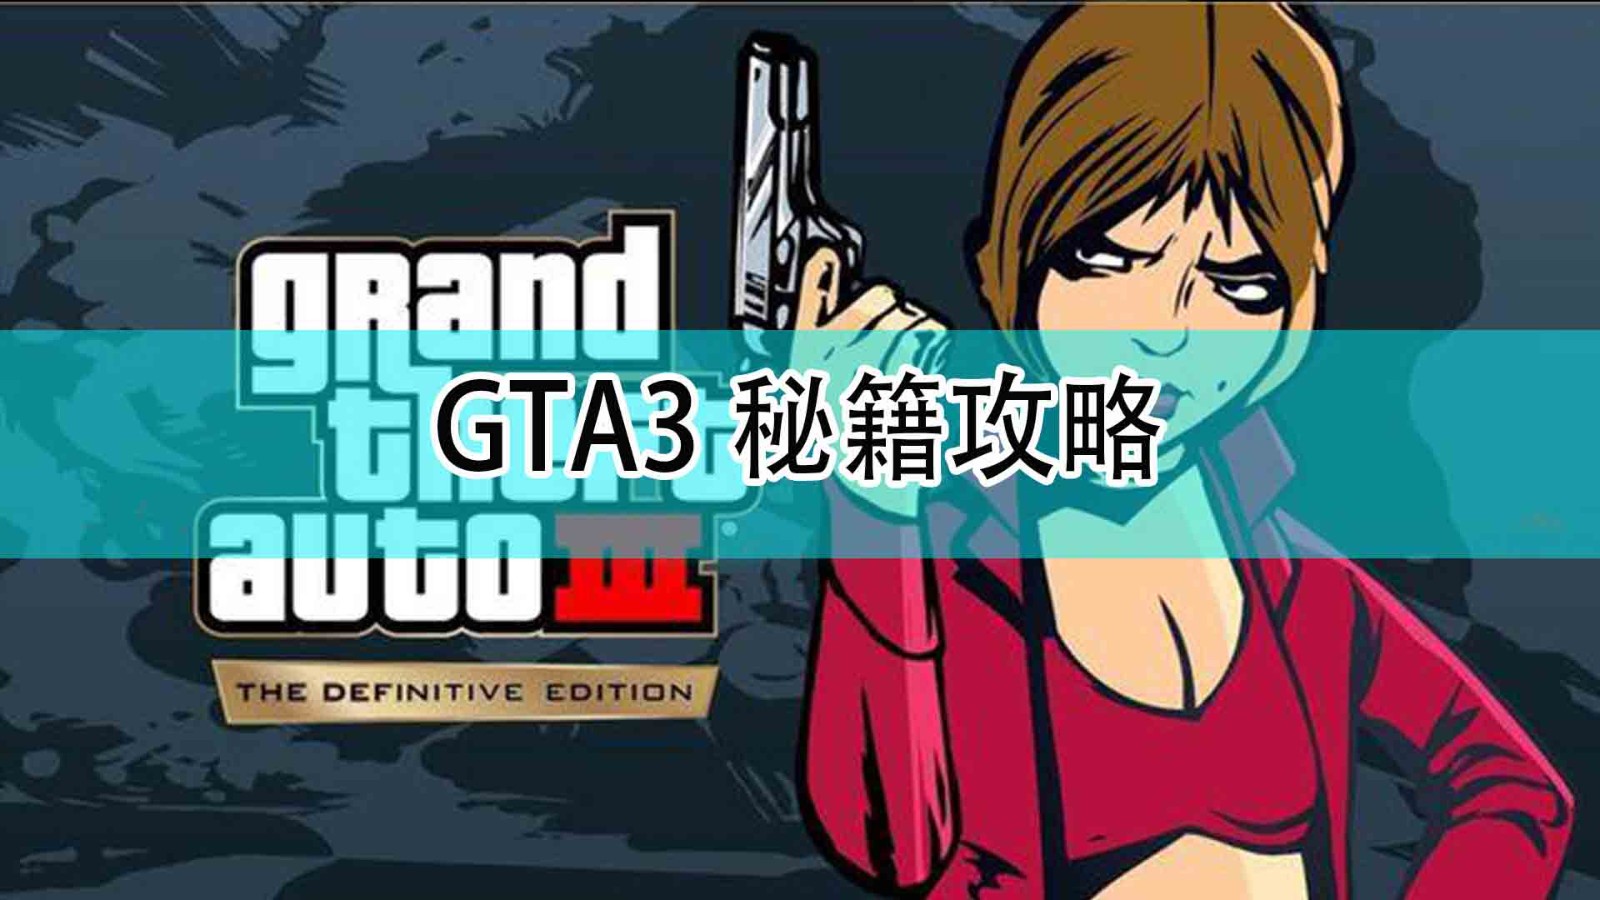 GTA3重置版秘籍是什么-资深玩家分享秘籍神秘代码攻略